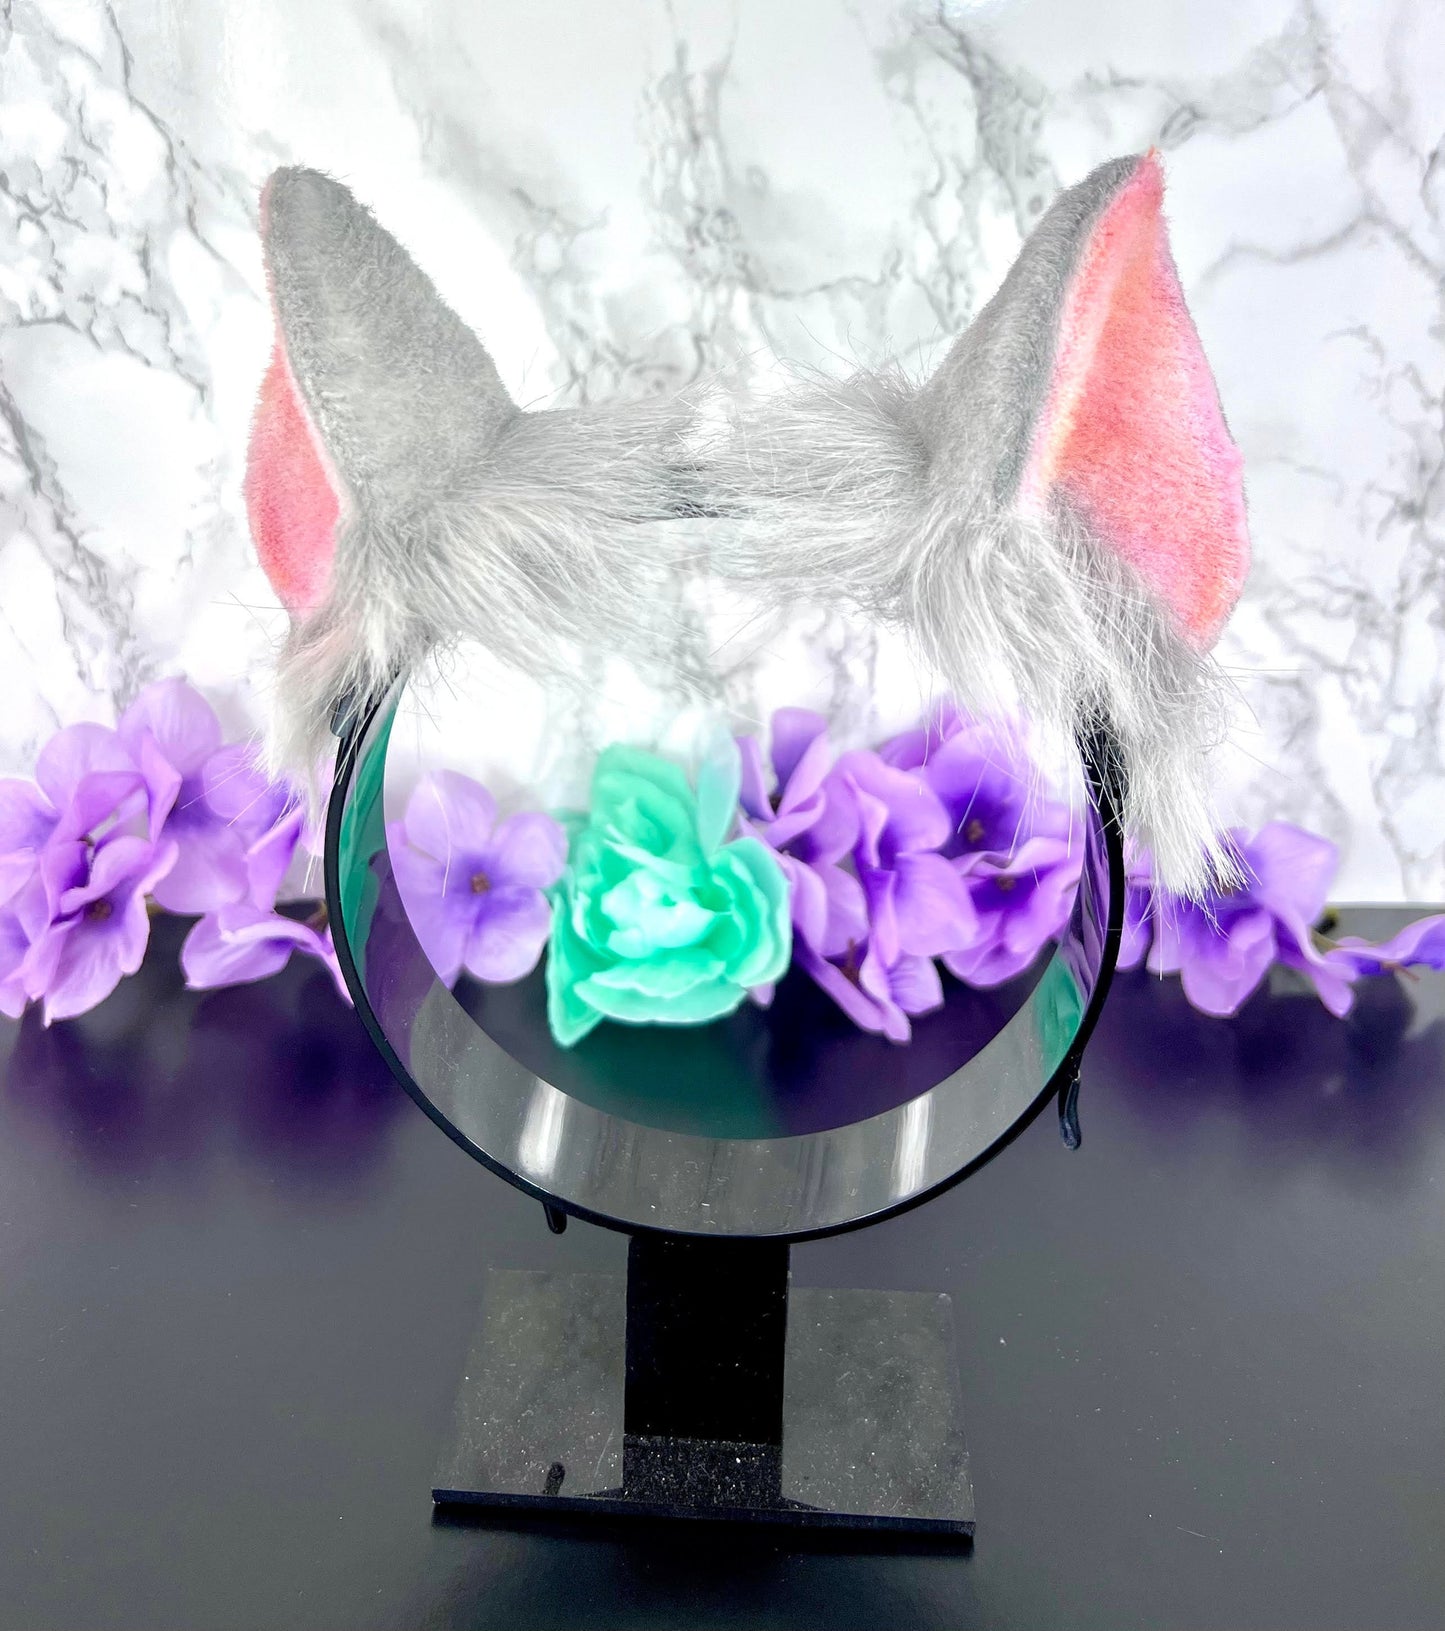 Gray Wolf- Puppy Ears